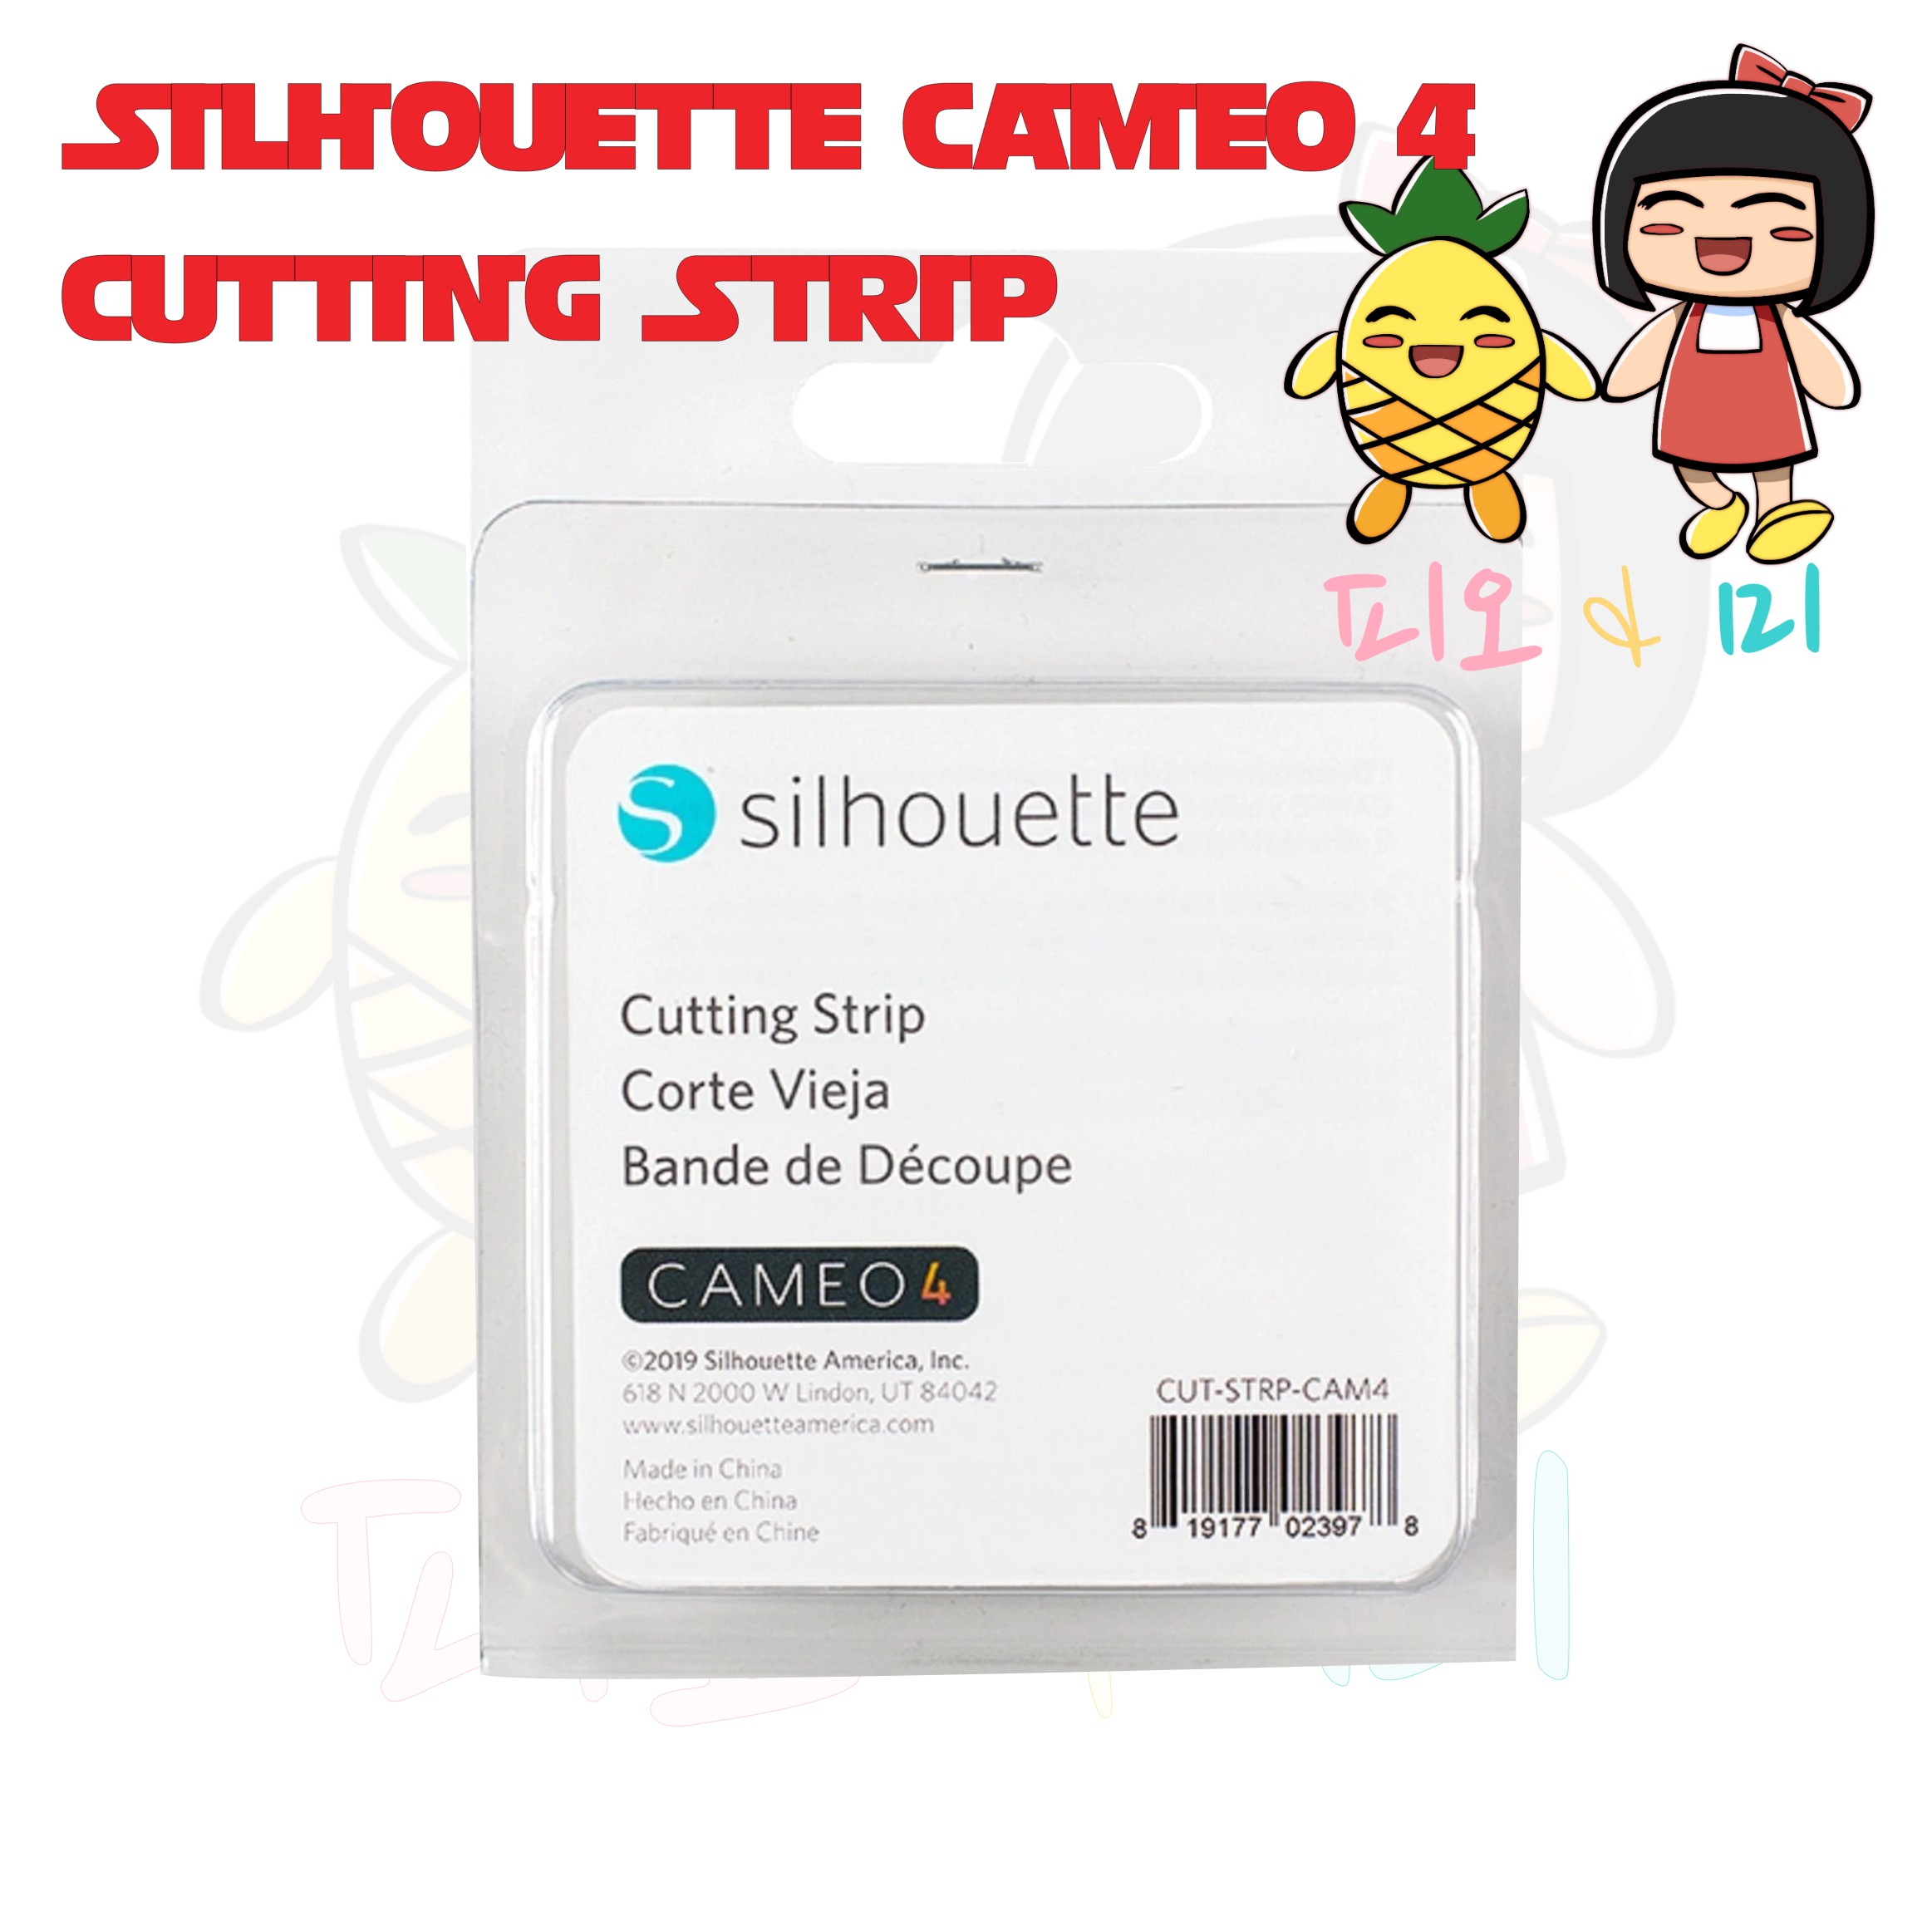 Silhouette Cameo 4 Cutting Strip